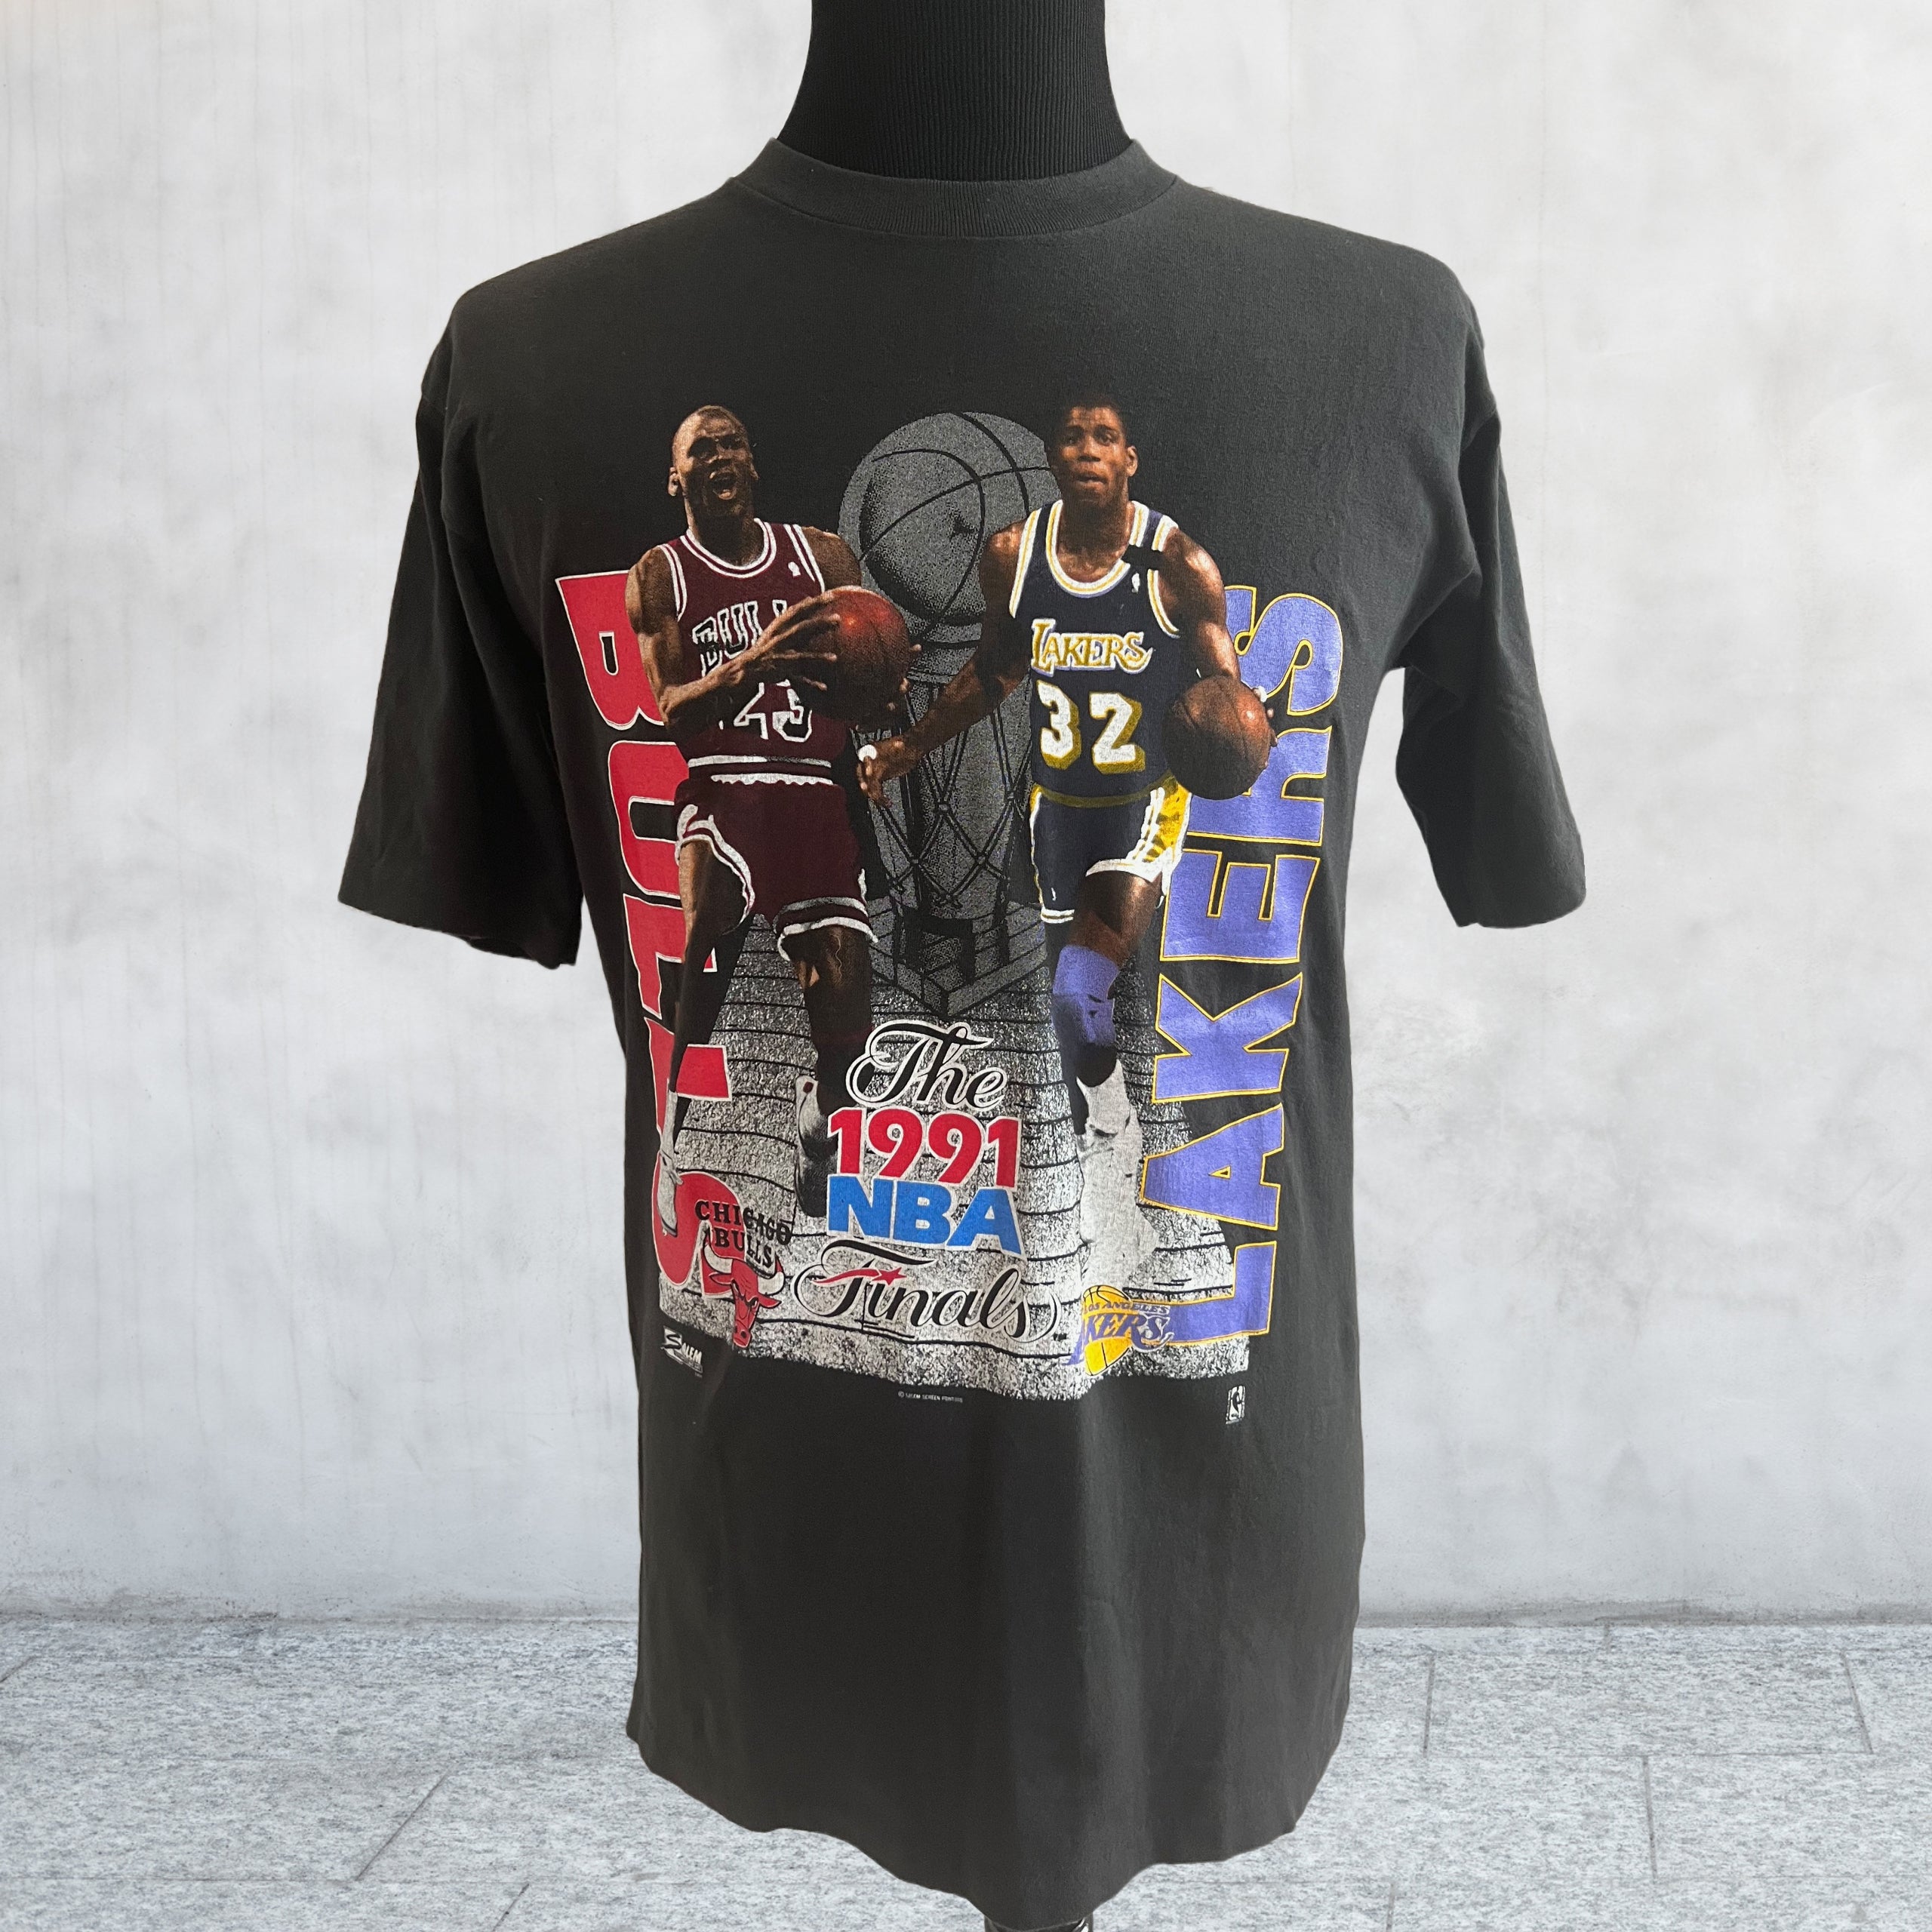 Vintage 1991 NBA Finals Bulls Vs Lakers Michael Jordan and Magic Johnson  T-Shirt. Large